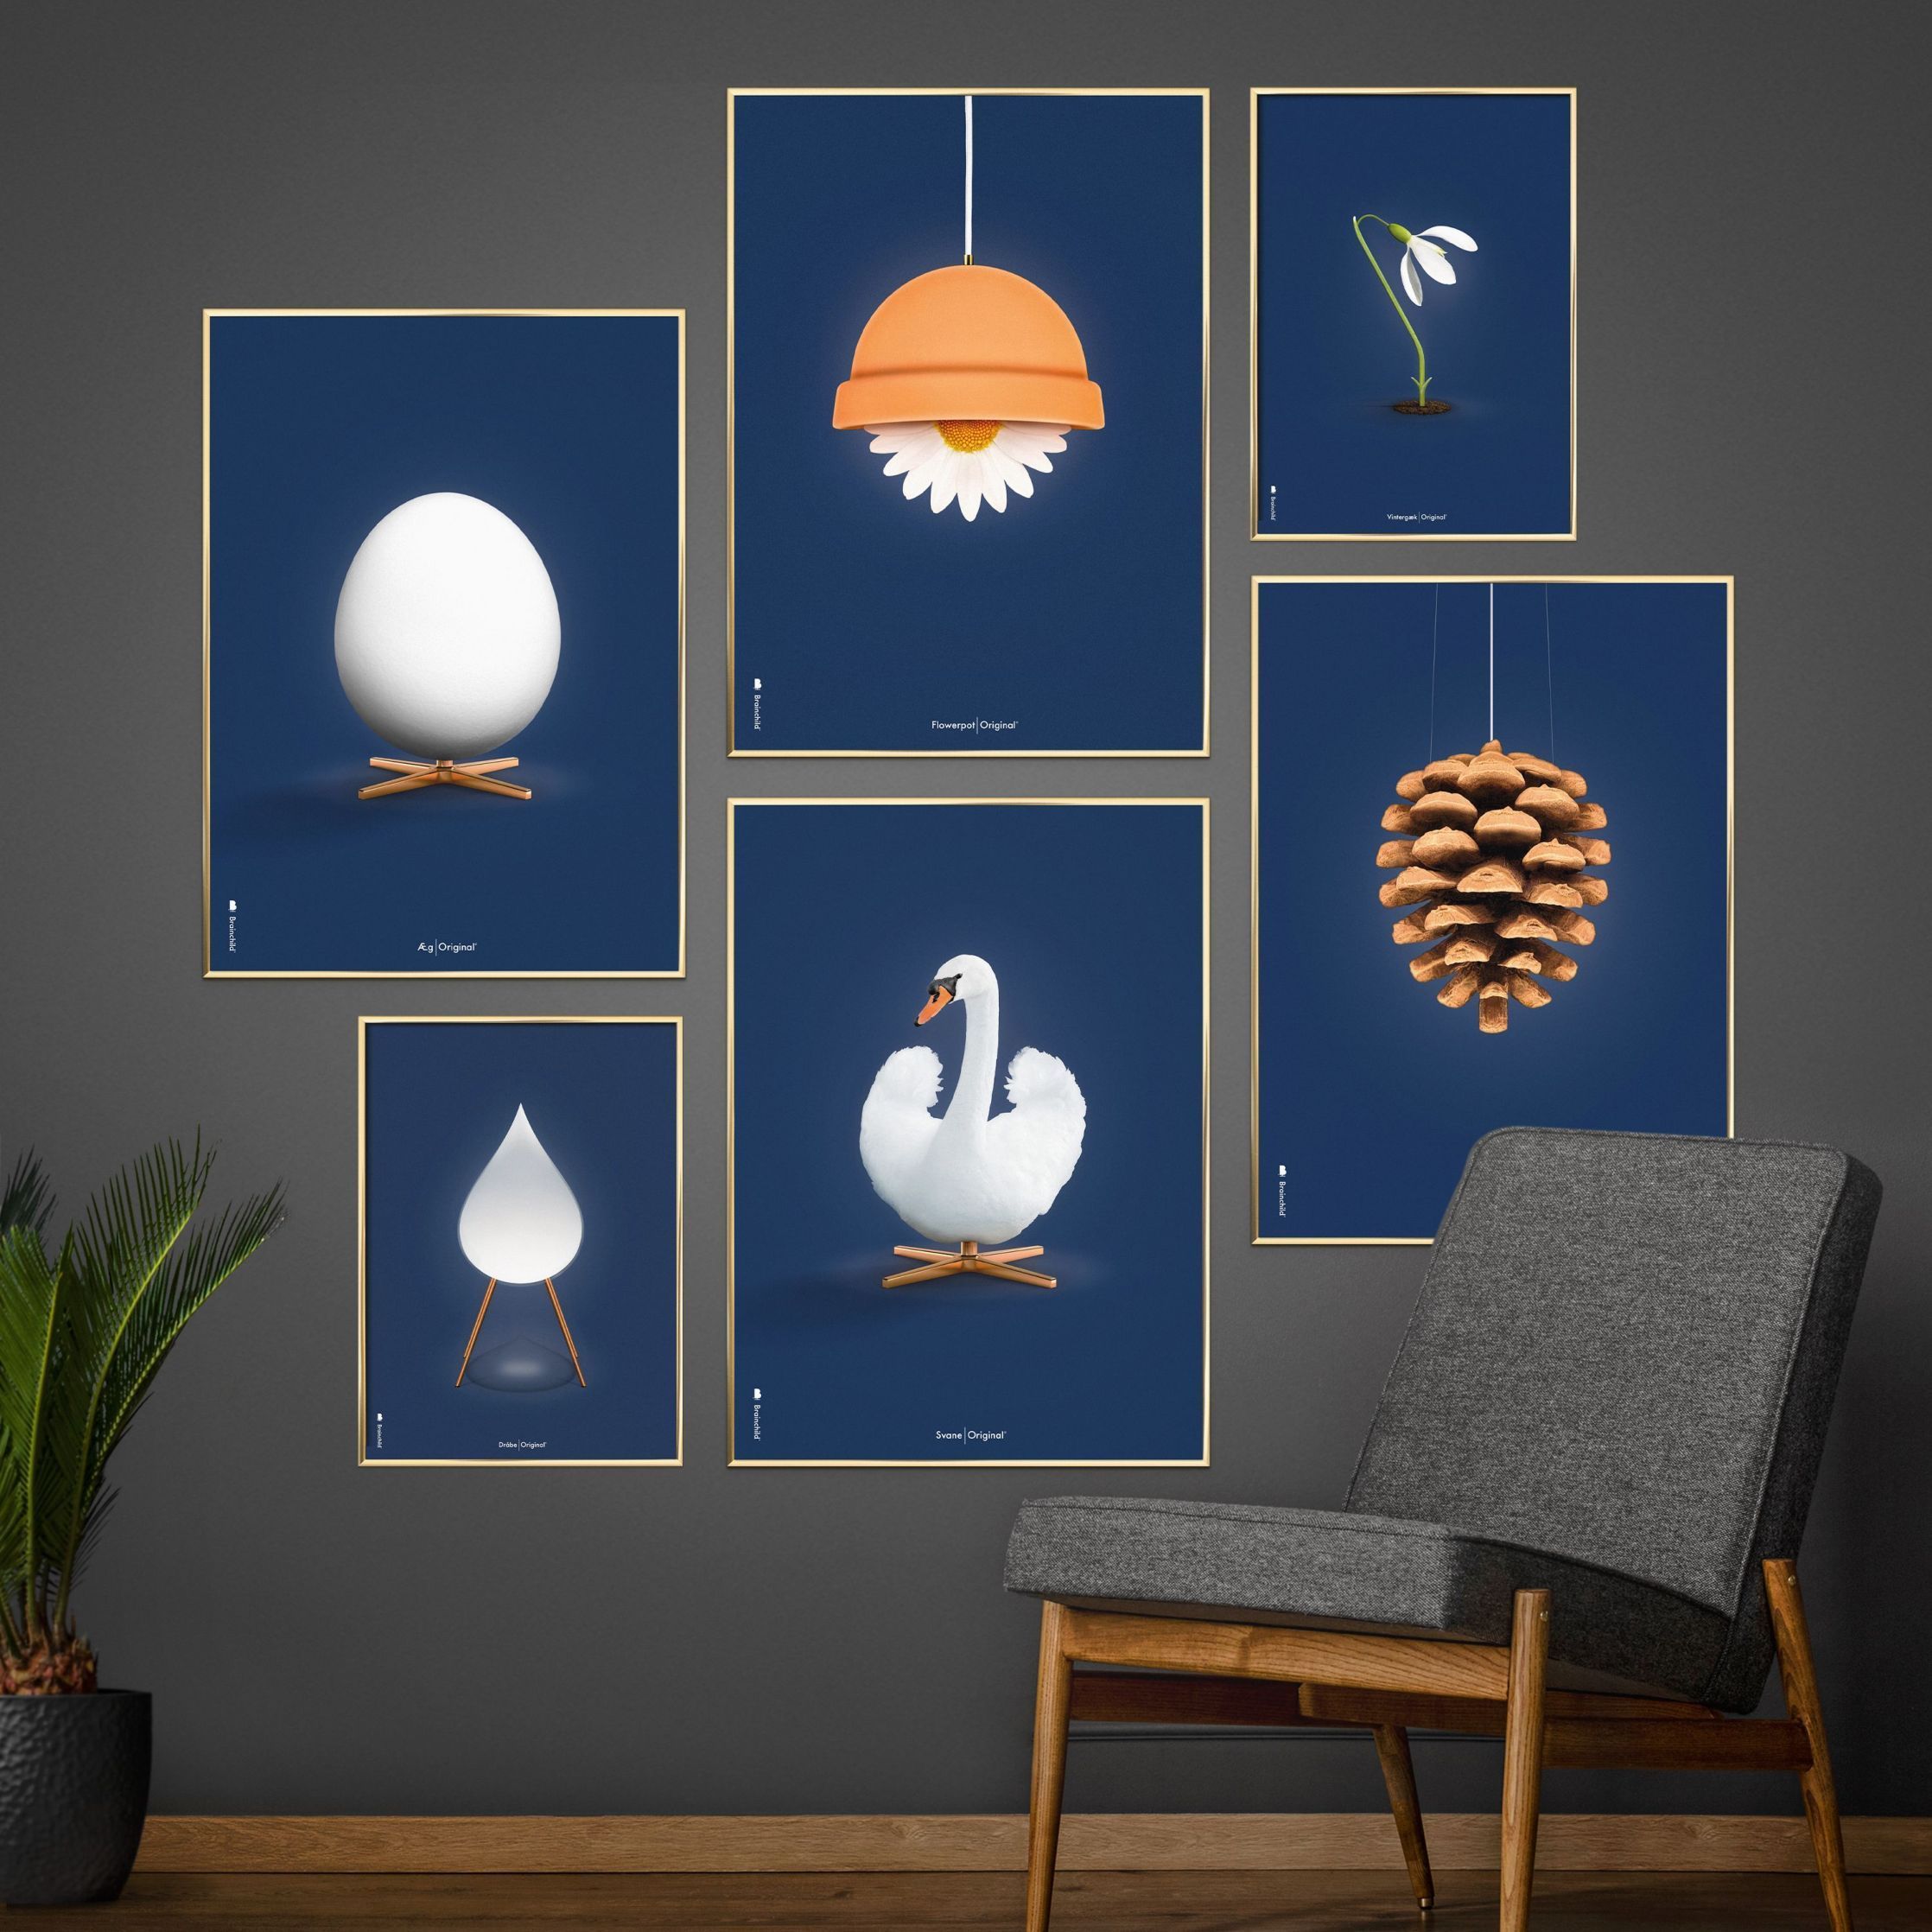 Brainchild Swan Classic Poster, Frame Made Of Light Wood 30x40 Cm, Dark Blue Background